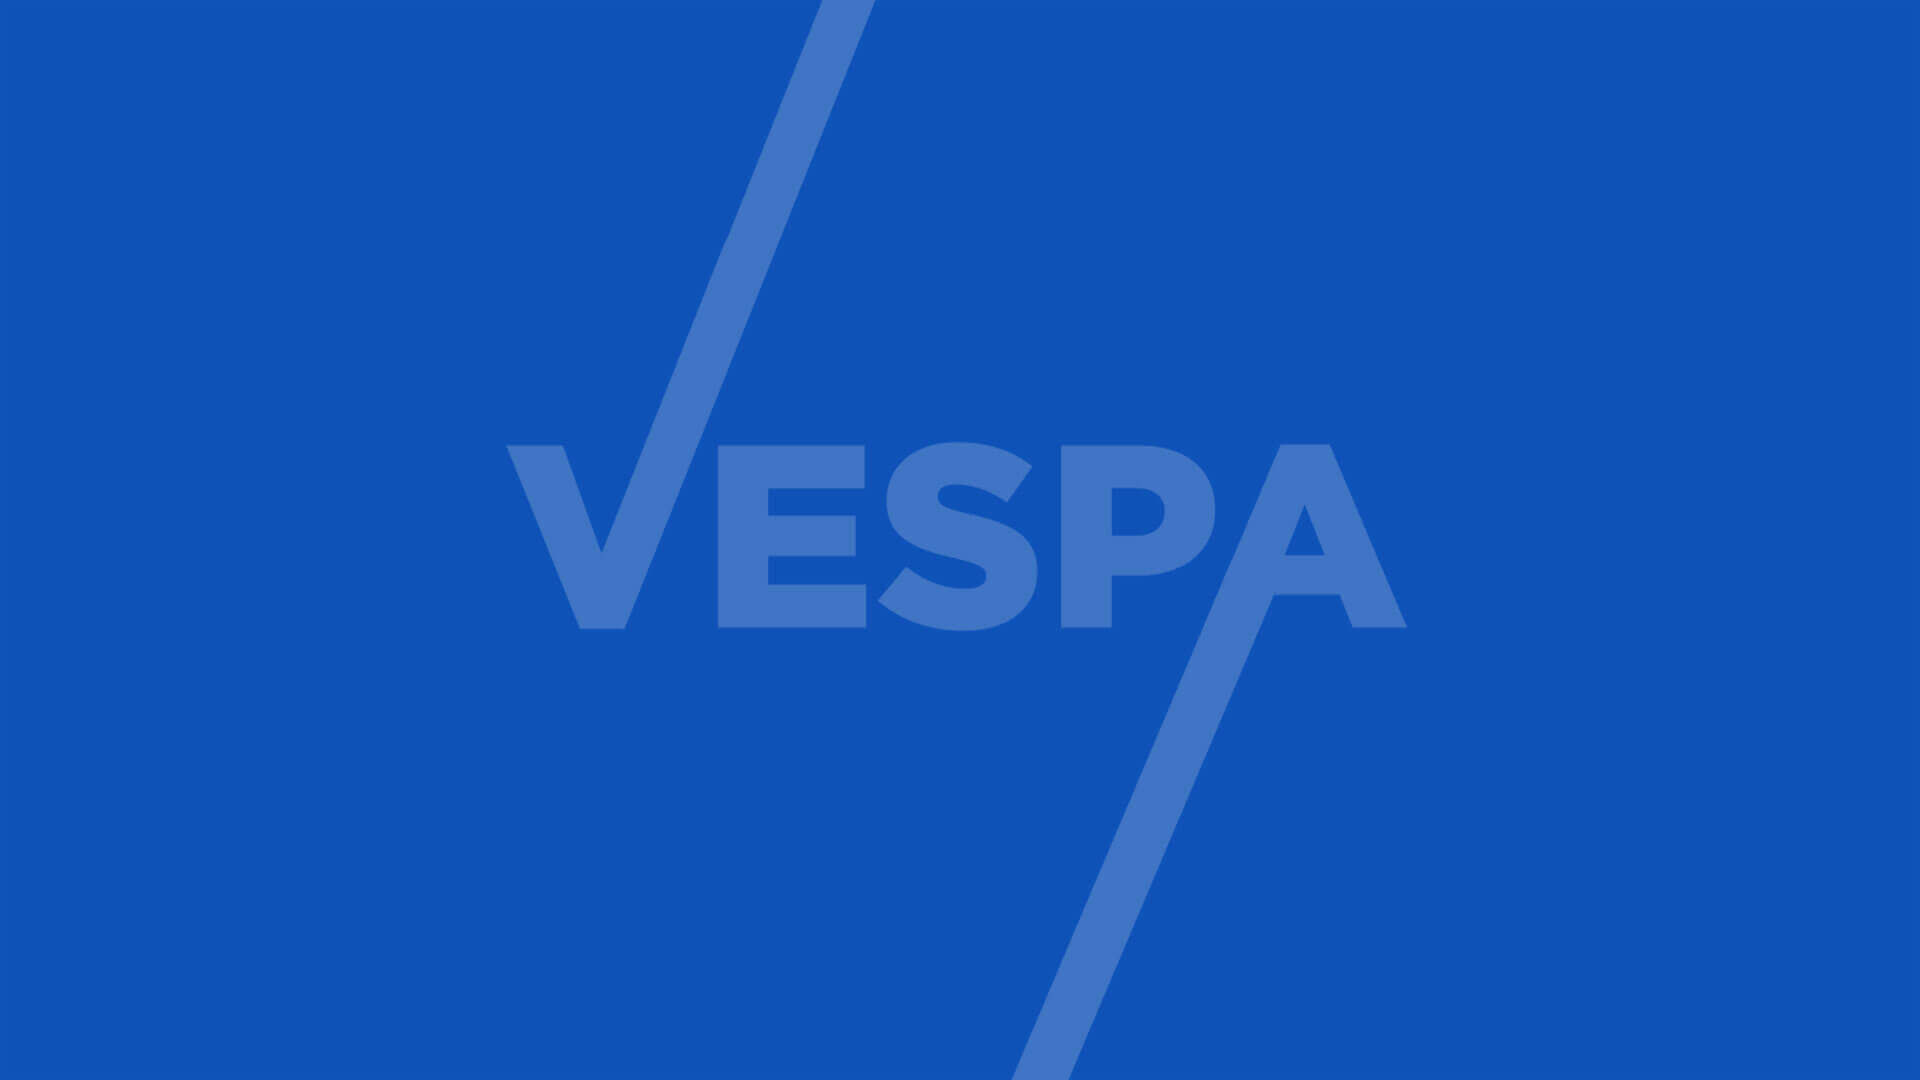 Vespa Garage Logo Design by Ruhul Amin Rubel on Dribbble